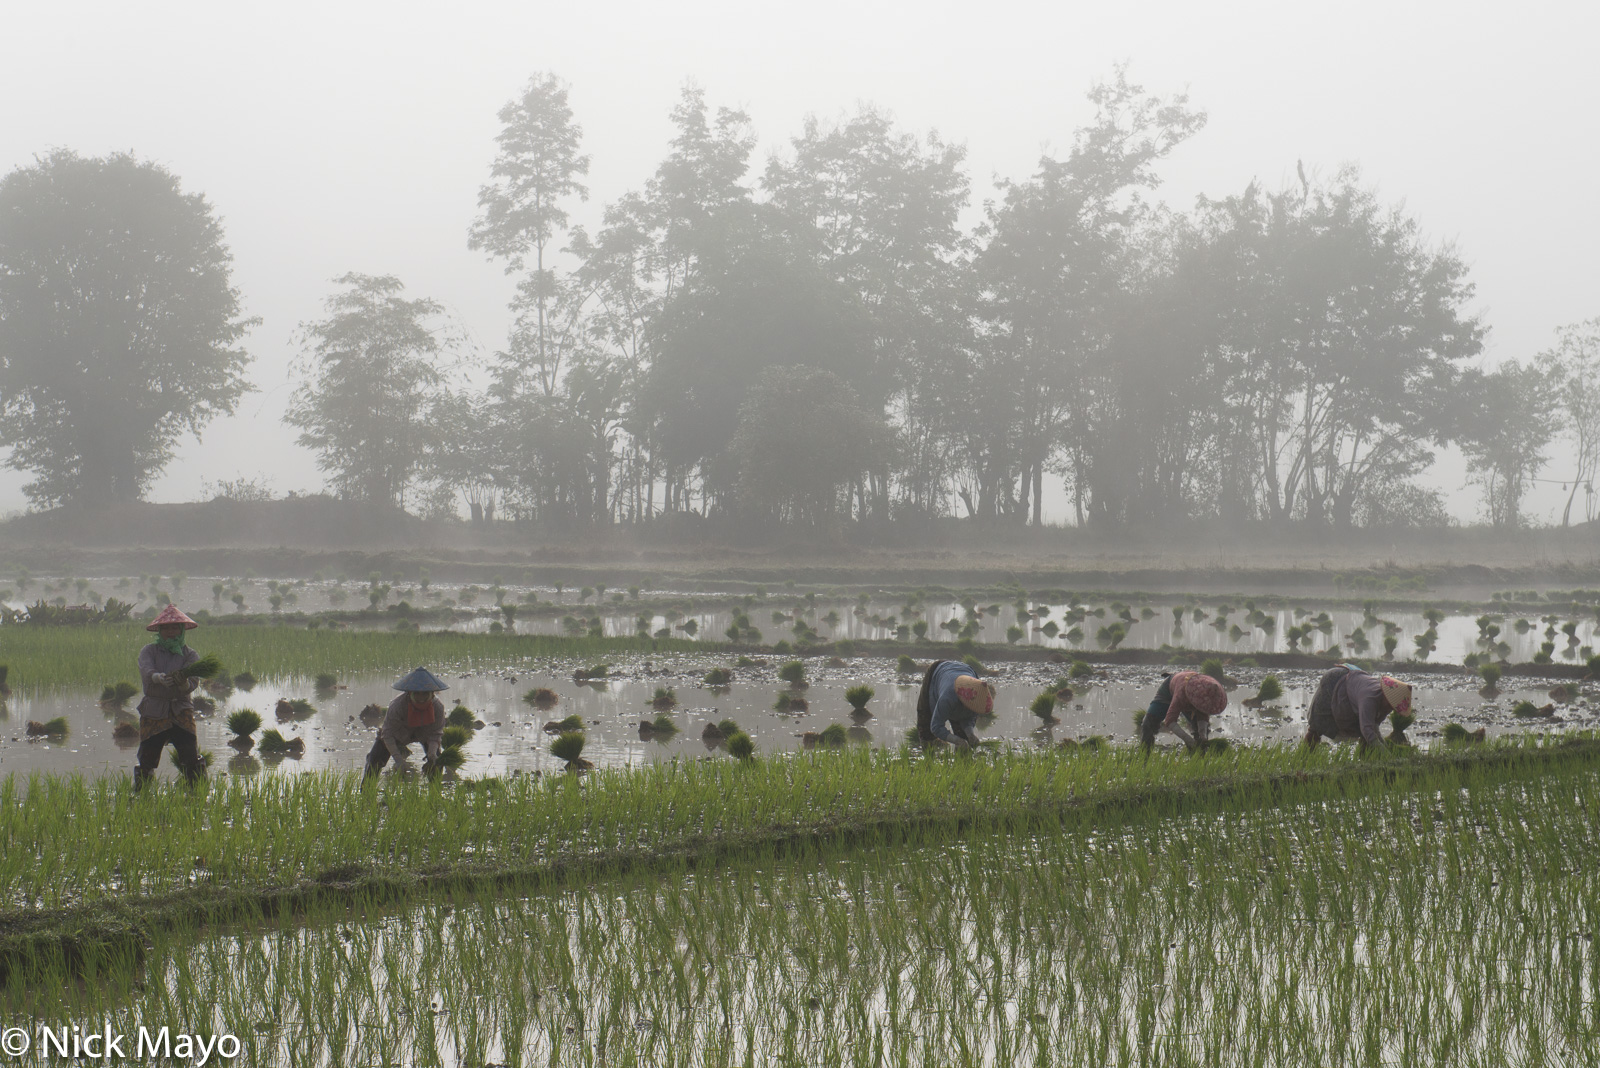 Five Shan women transplanting paddy rice near Kalaw.